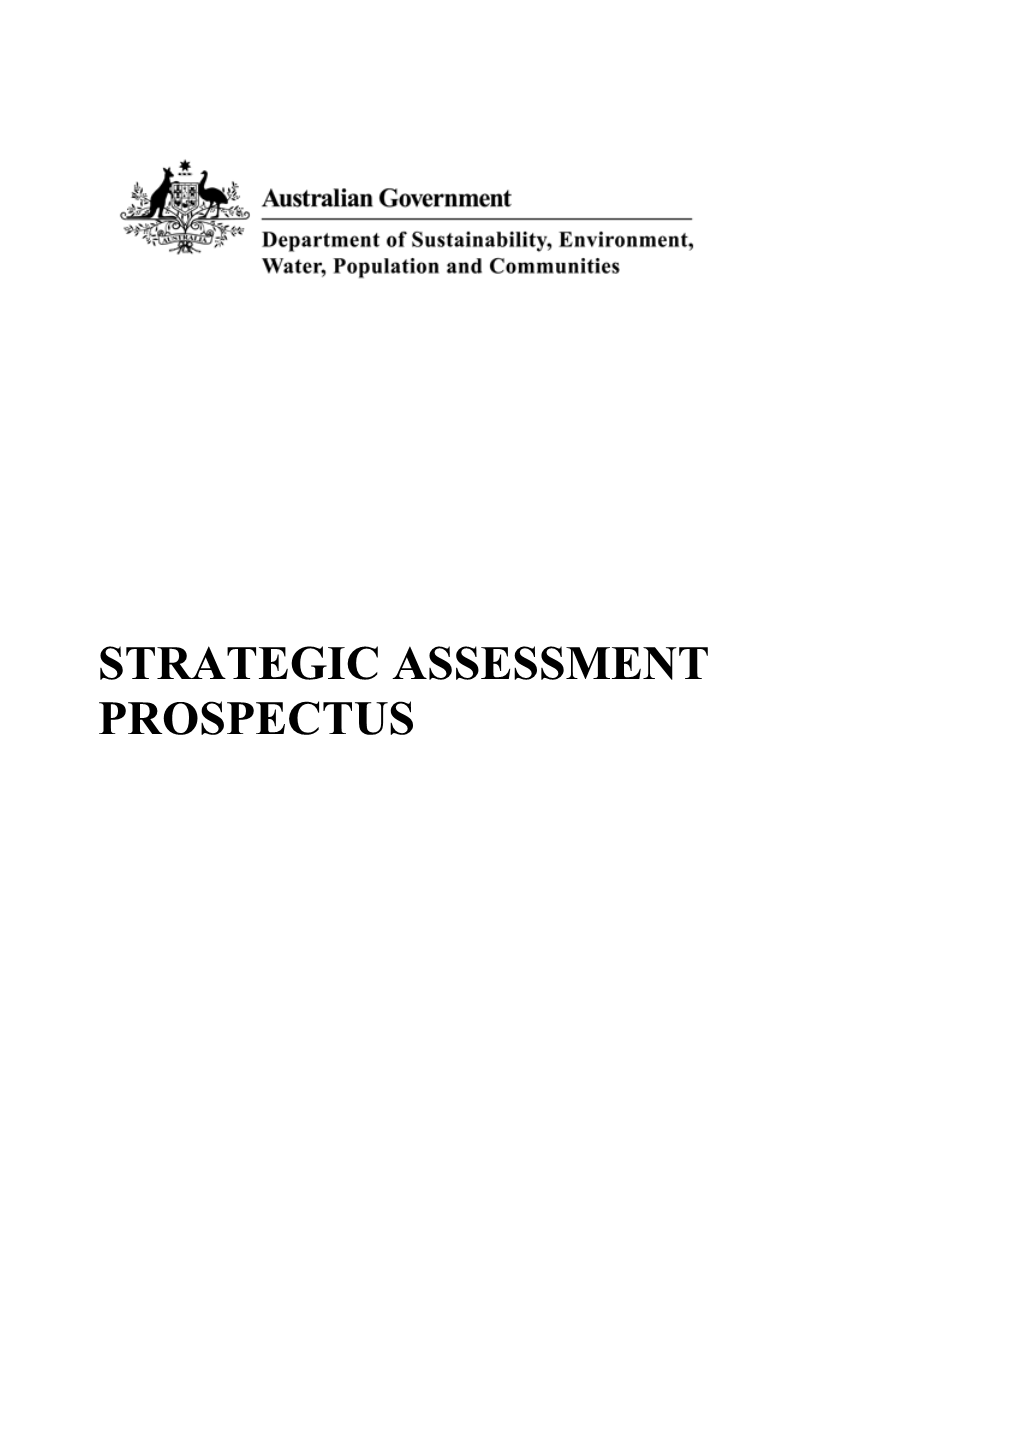 Strategic Assessment Prospectus